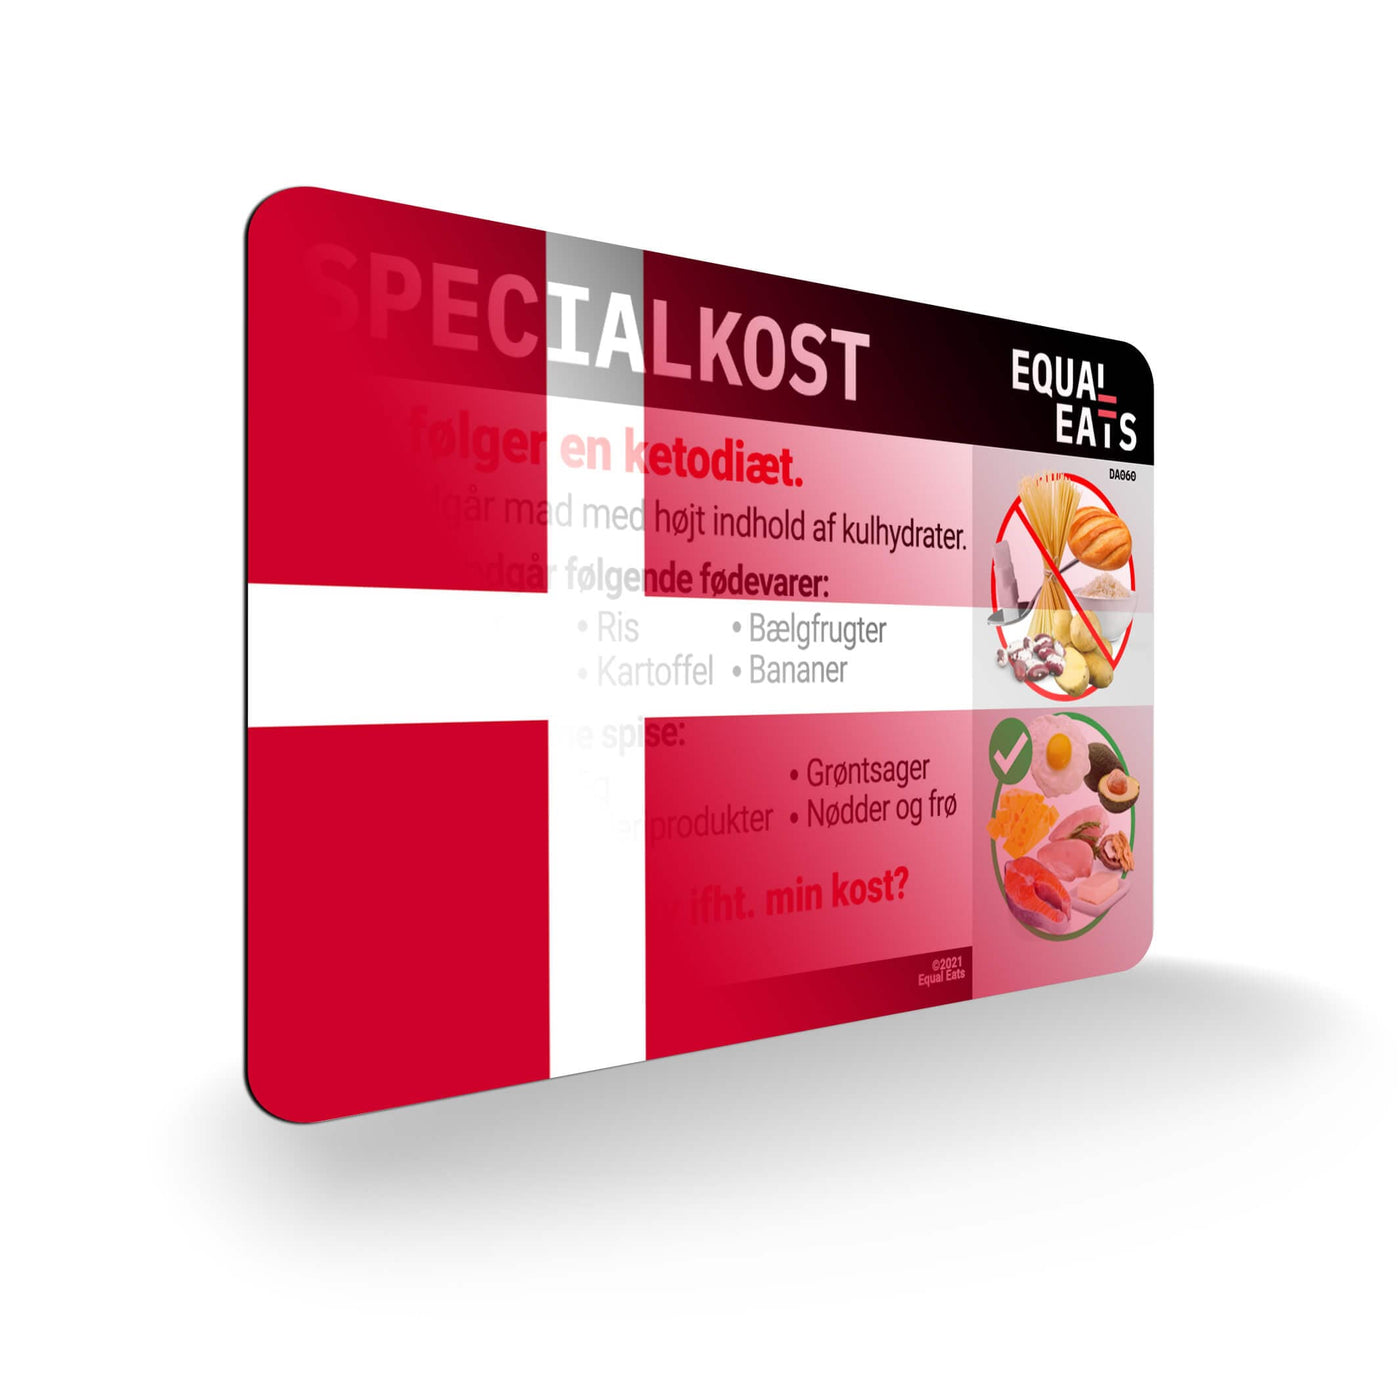 Danish Keto Diet Card